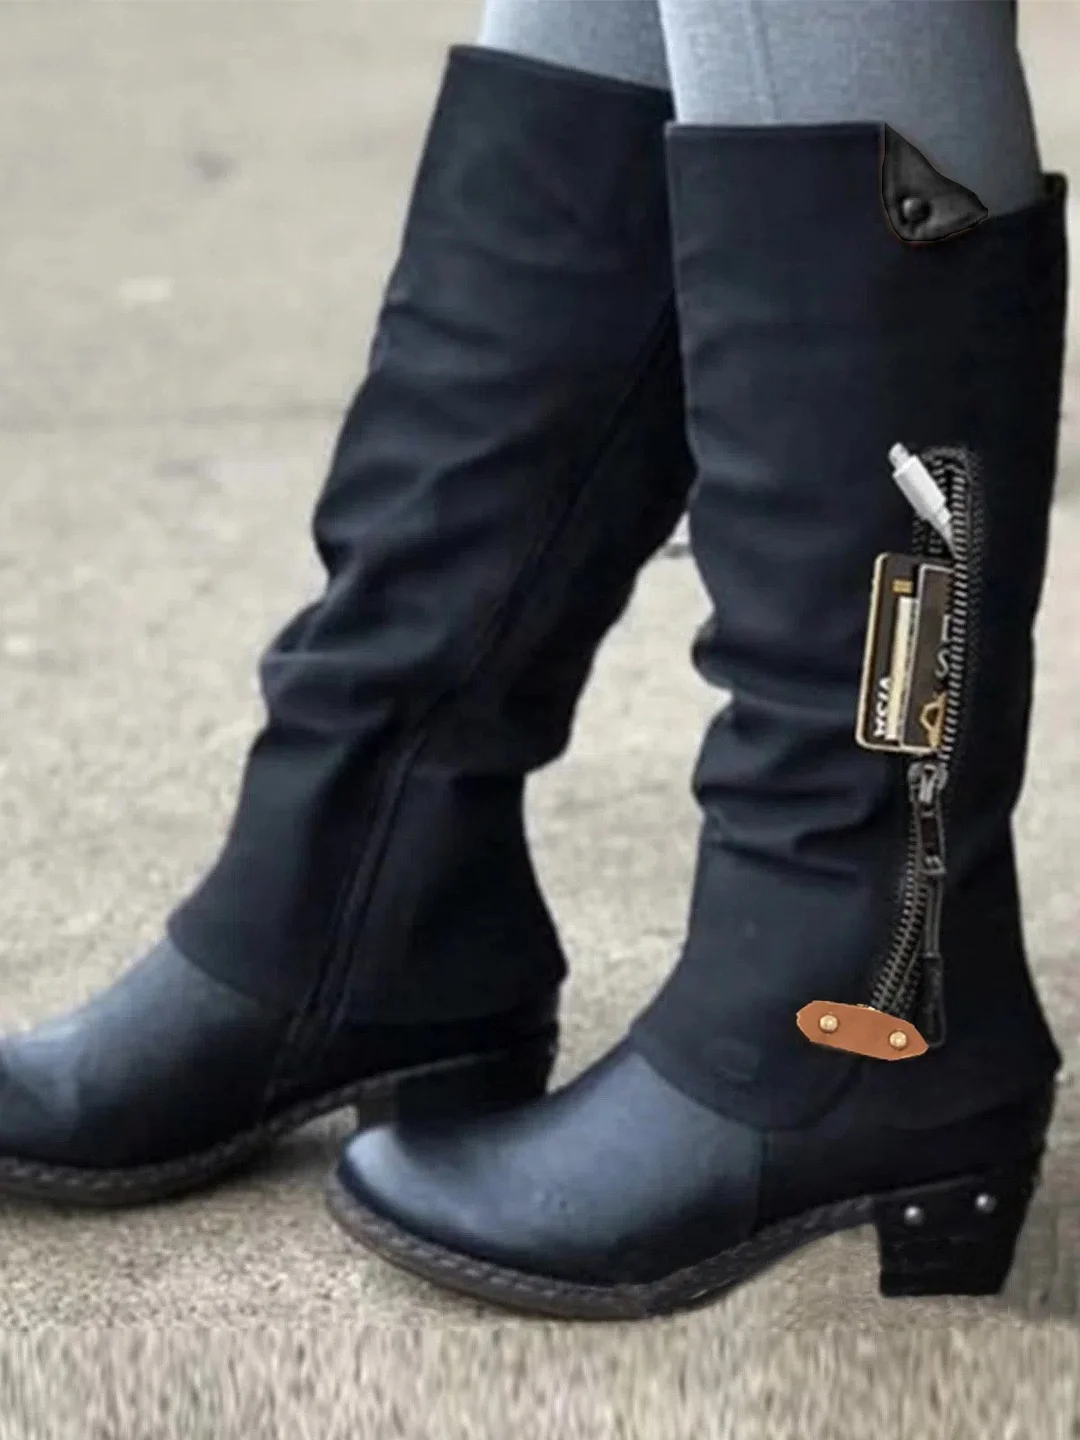 Casual Block Heel Fall Boots | EGEMISS